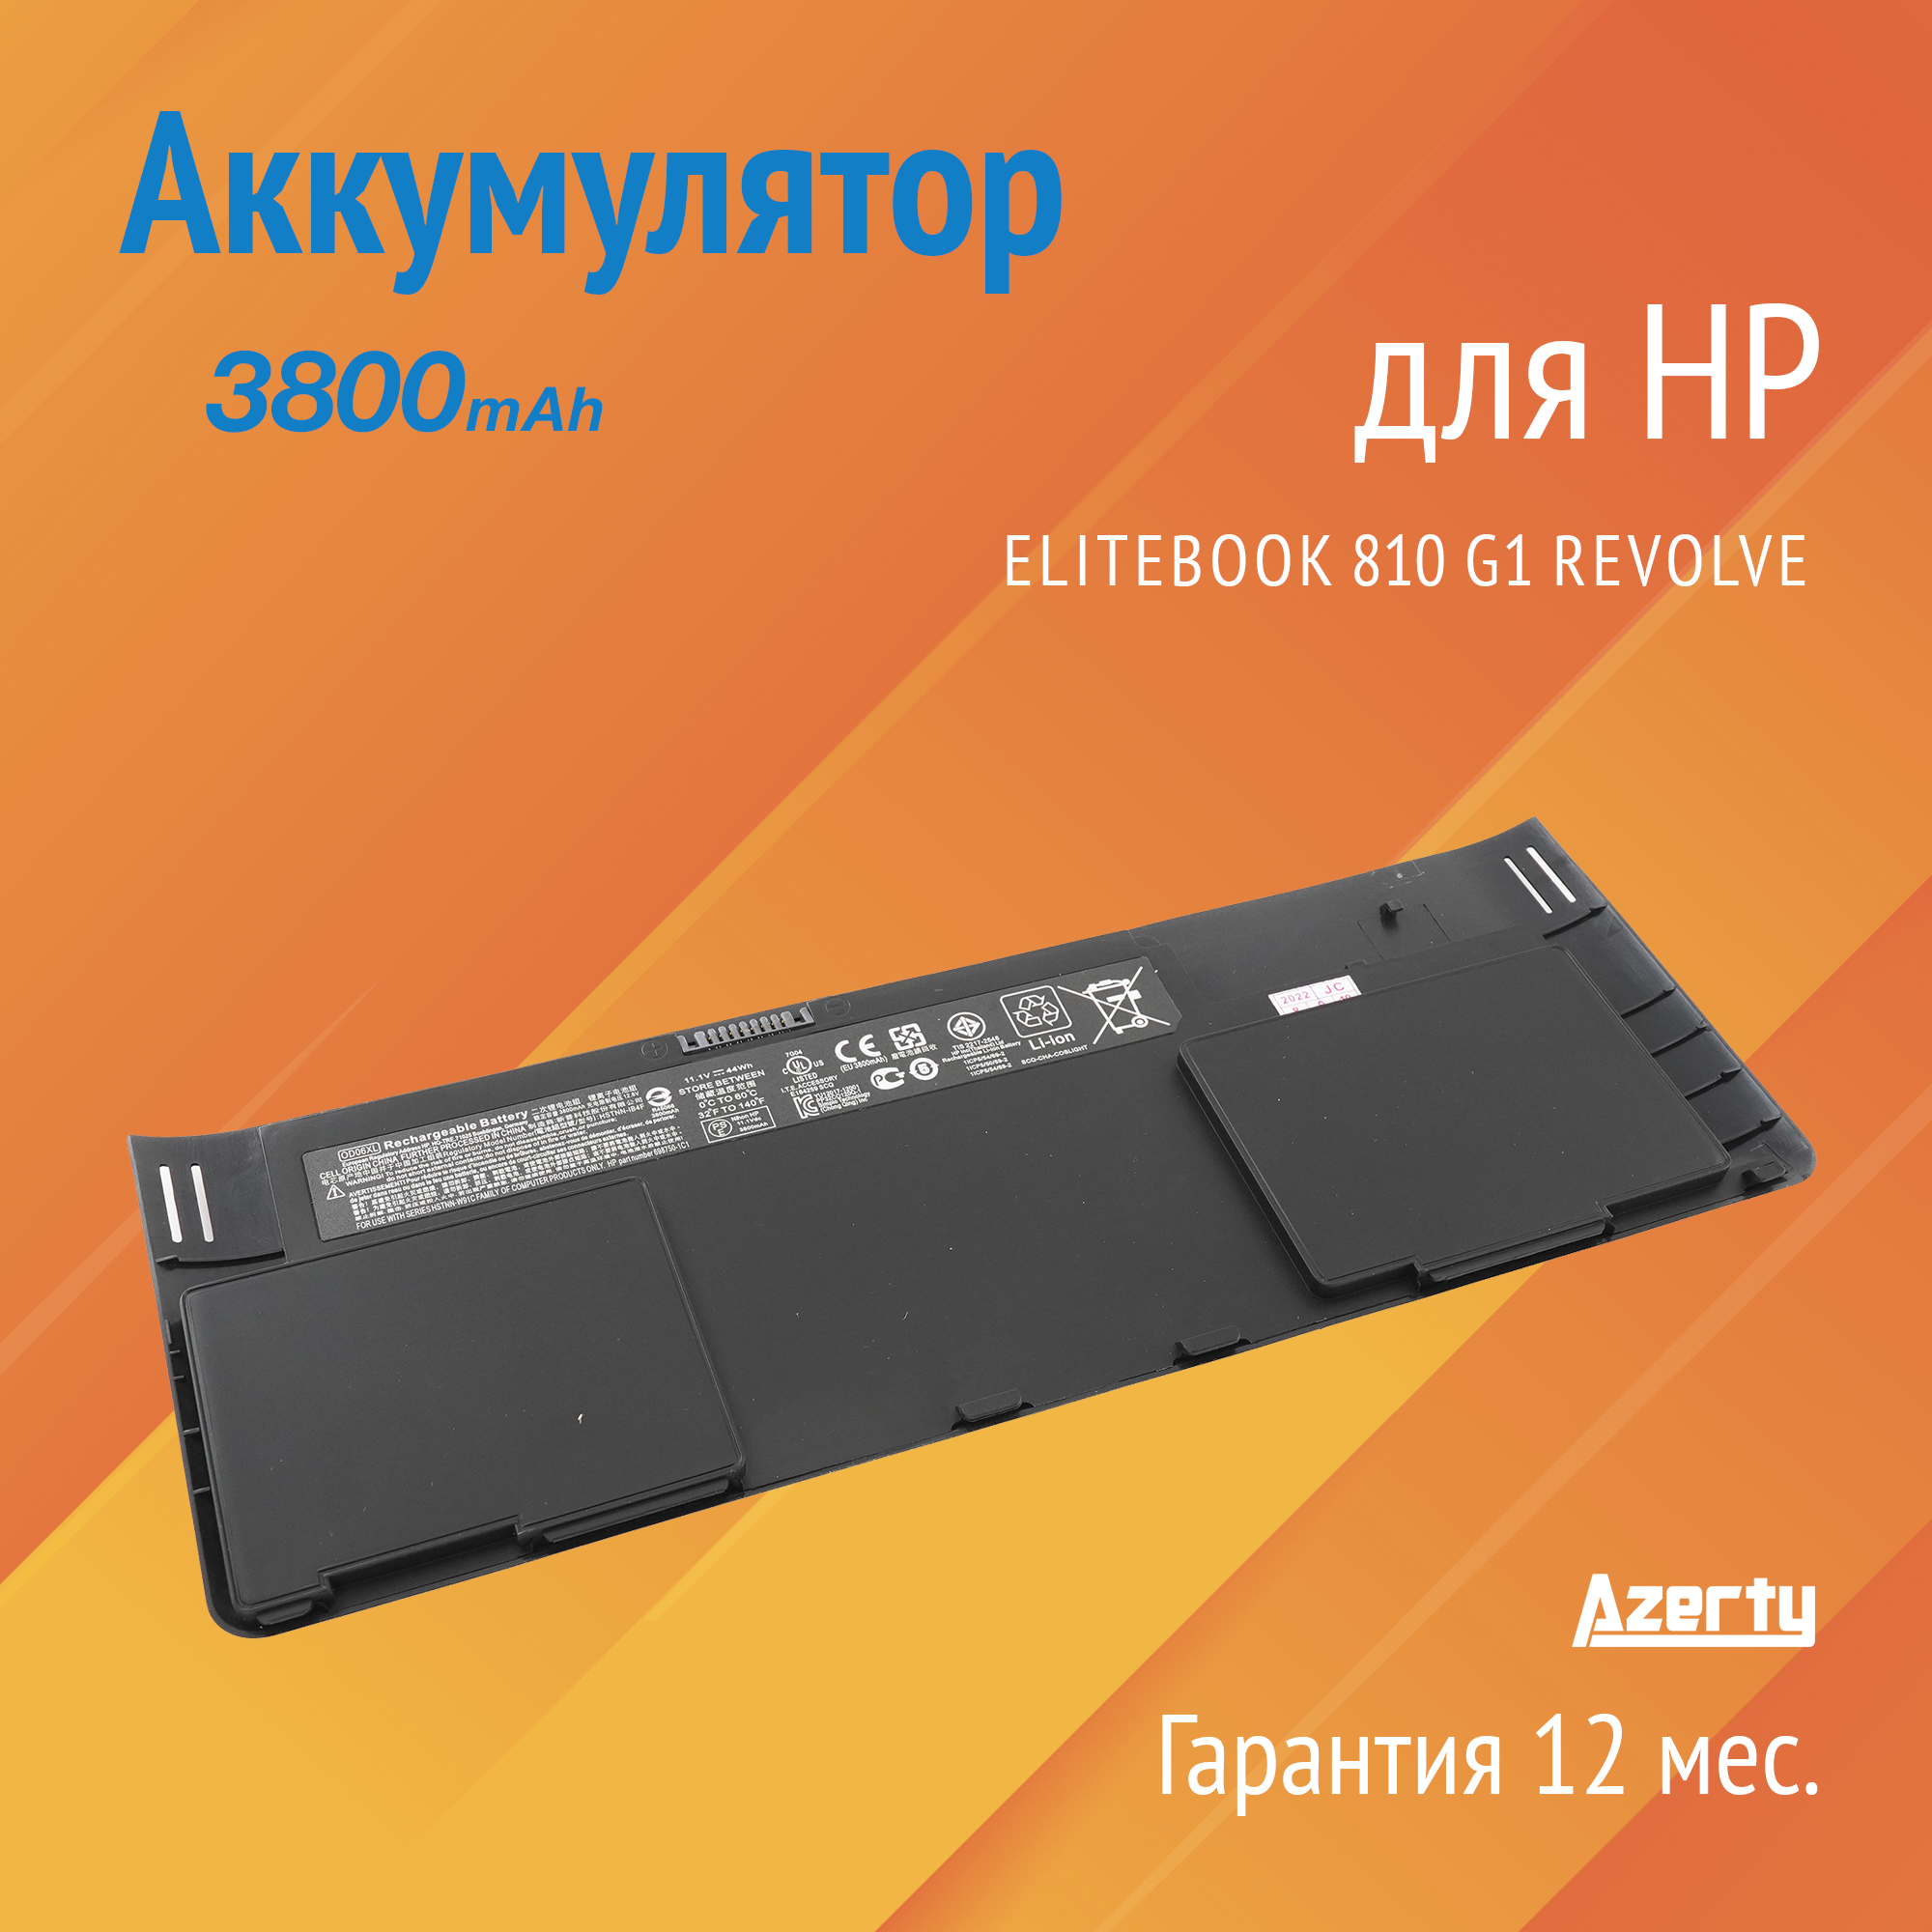 Аккумулятор OD06XL для HP EliteBook 810 G1 Revolve (698750-171, H6L25AA, H6L25UT) 3800mAh